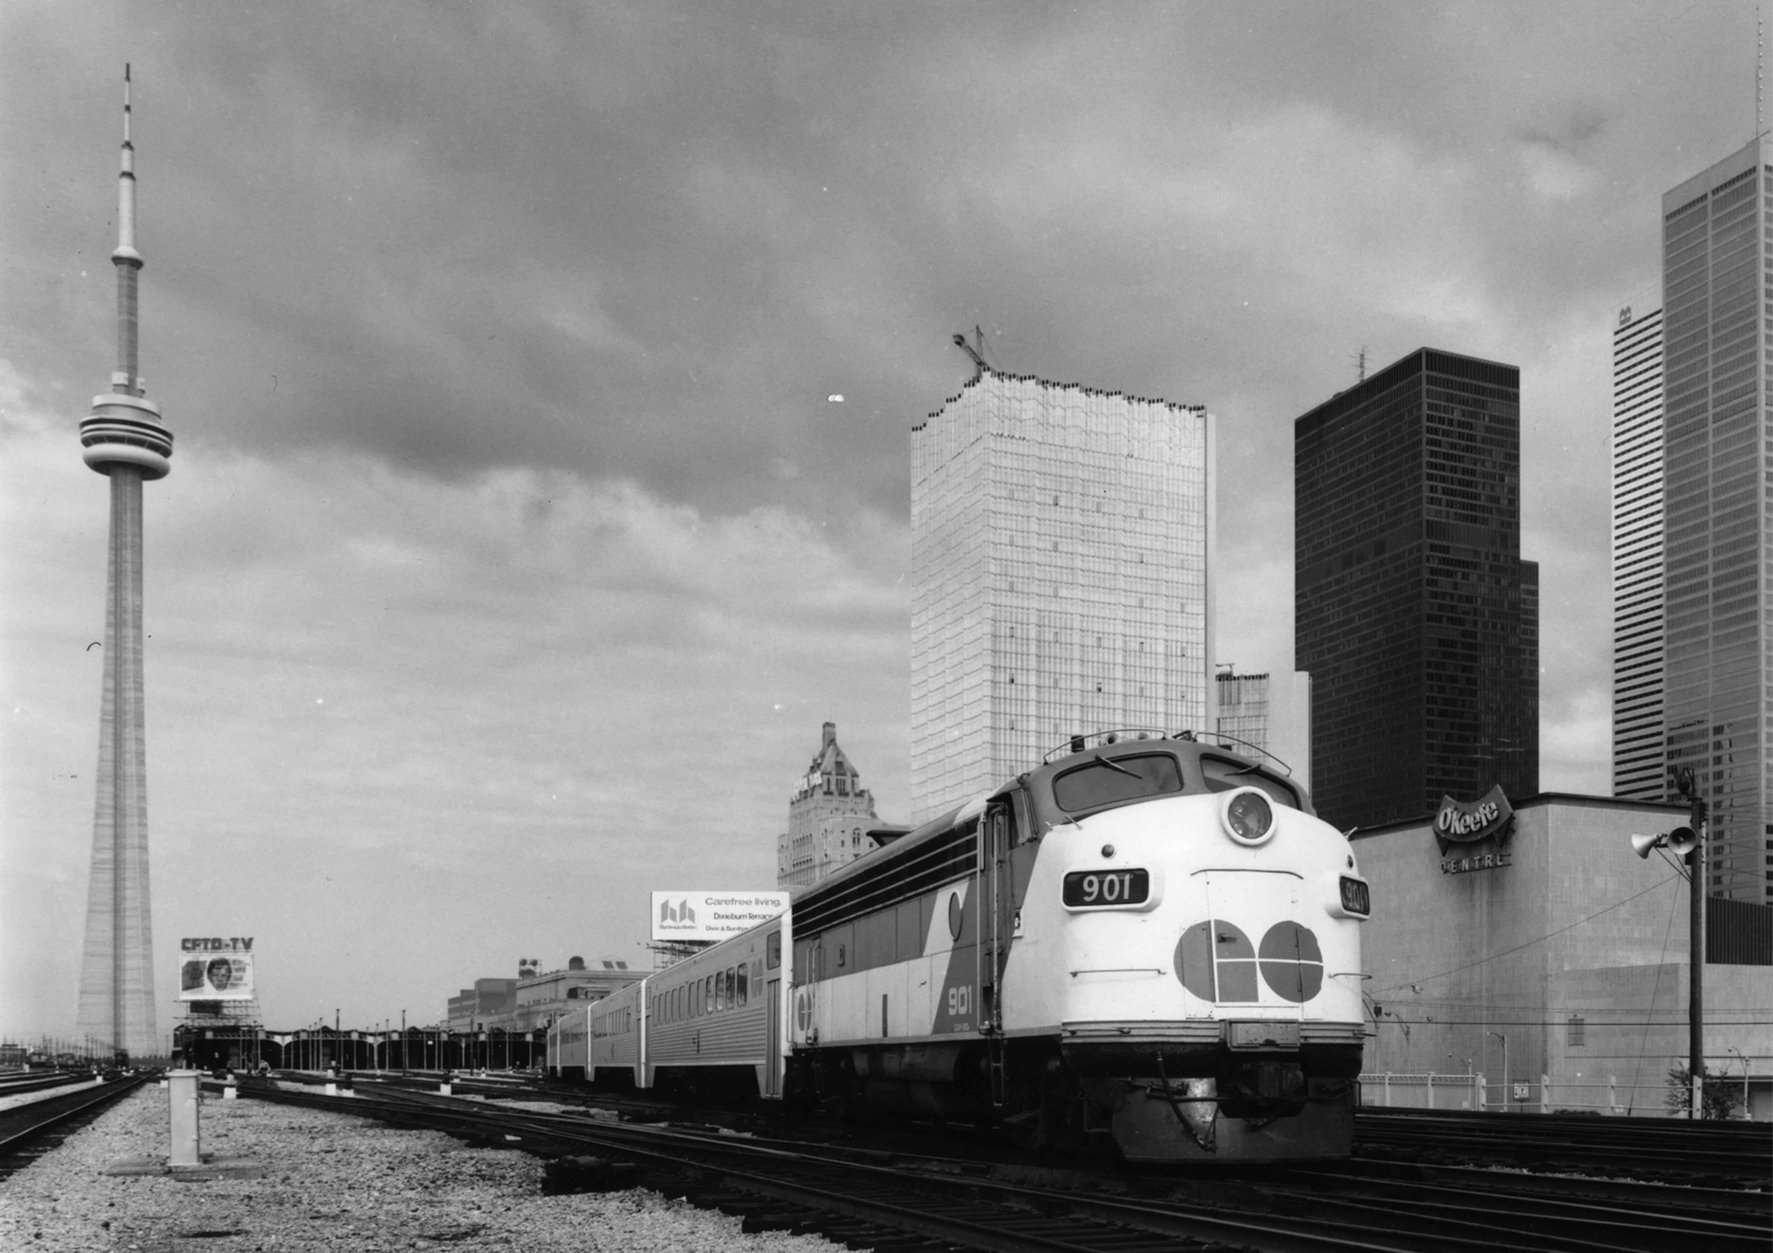 GO Train CN Tower in background circa 1970s